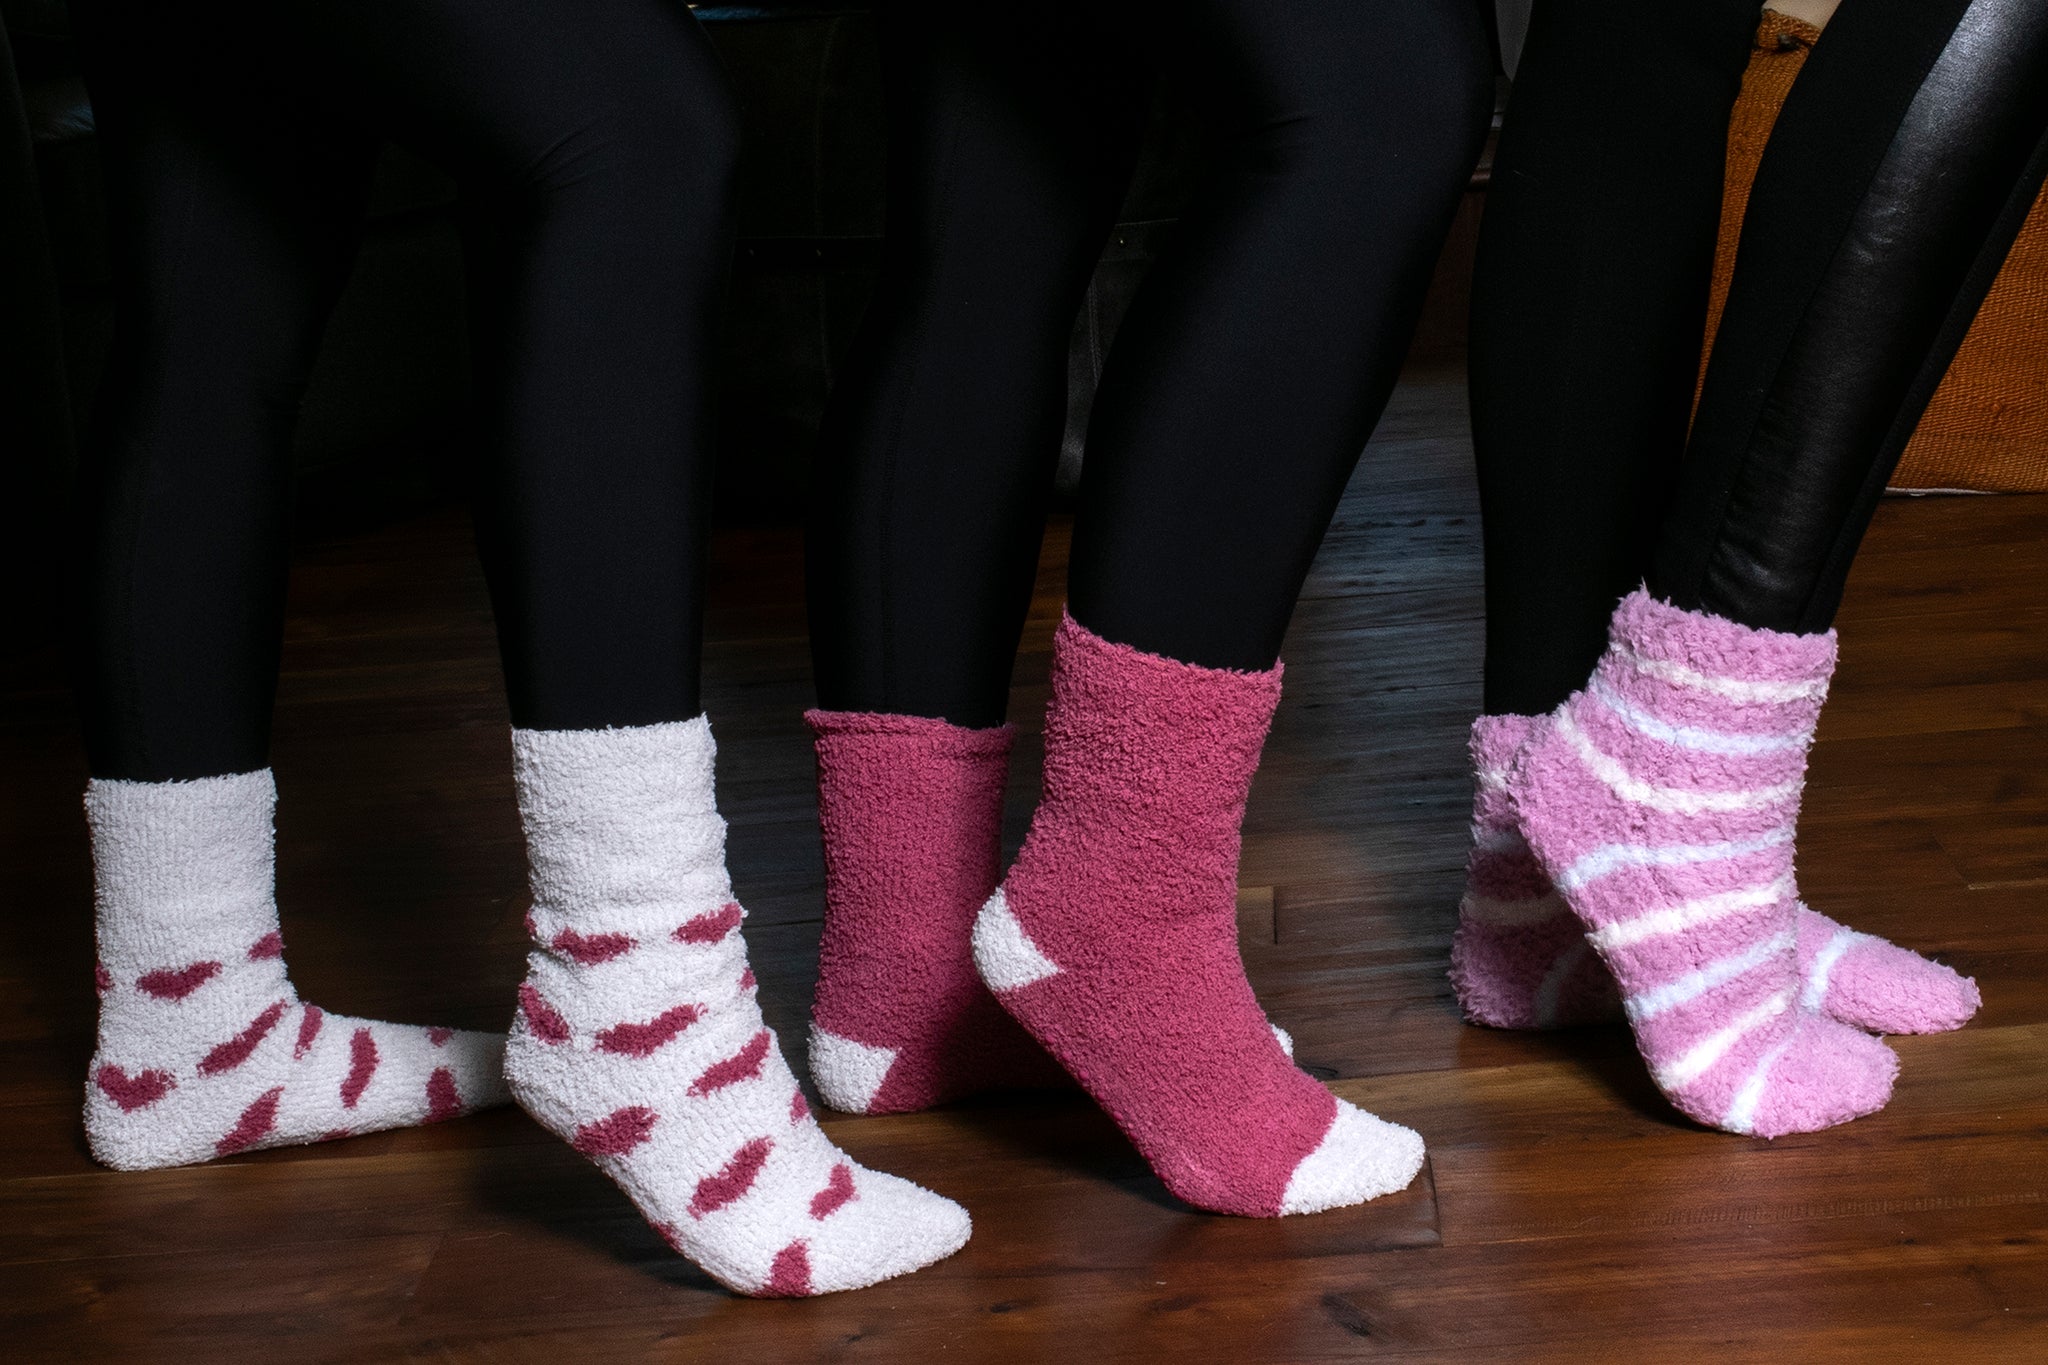 Big holiday savings!zanvin Women Winter Thick Slipper Socks With